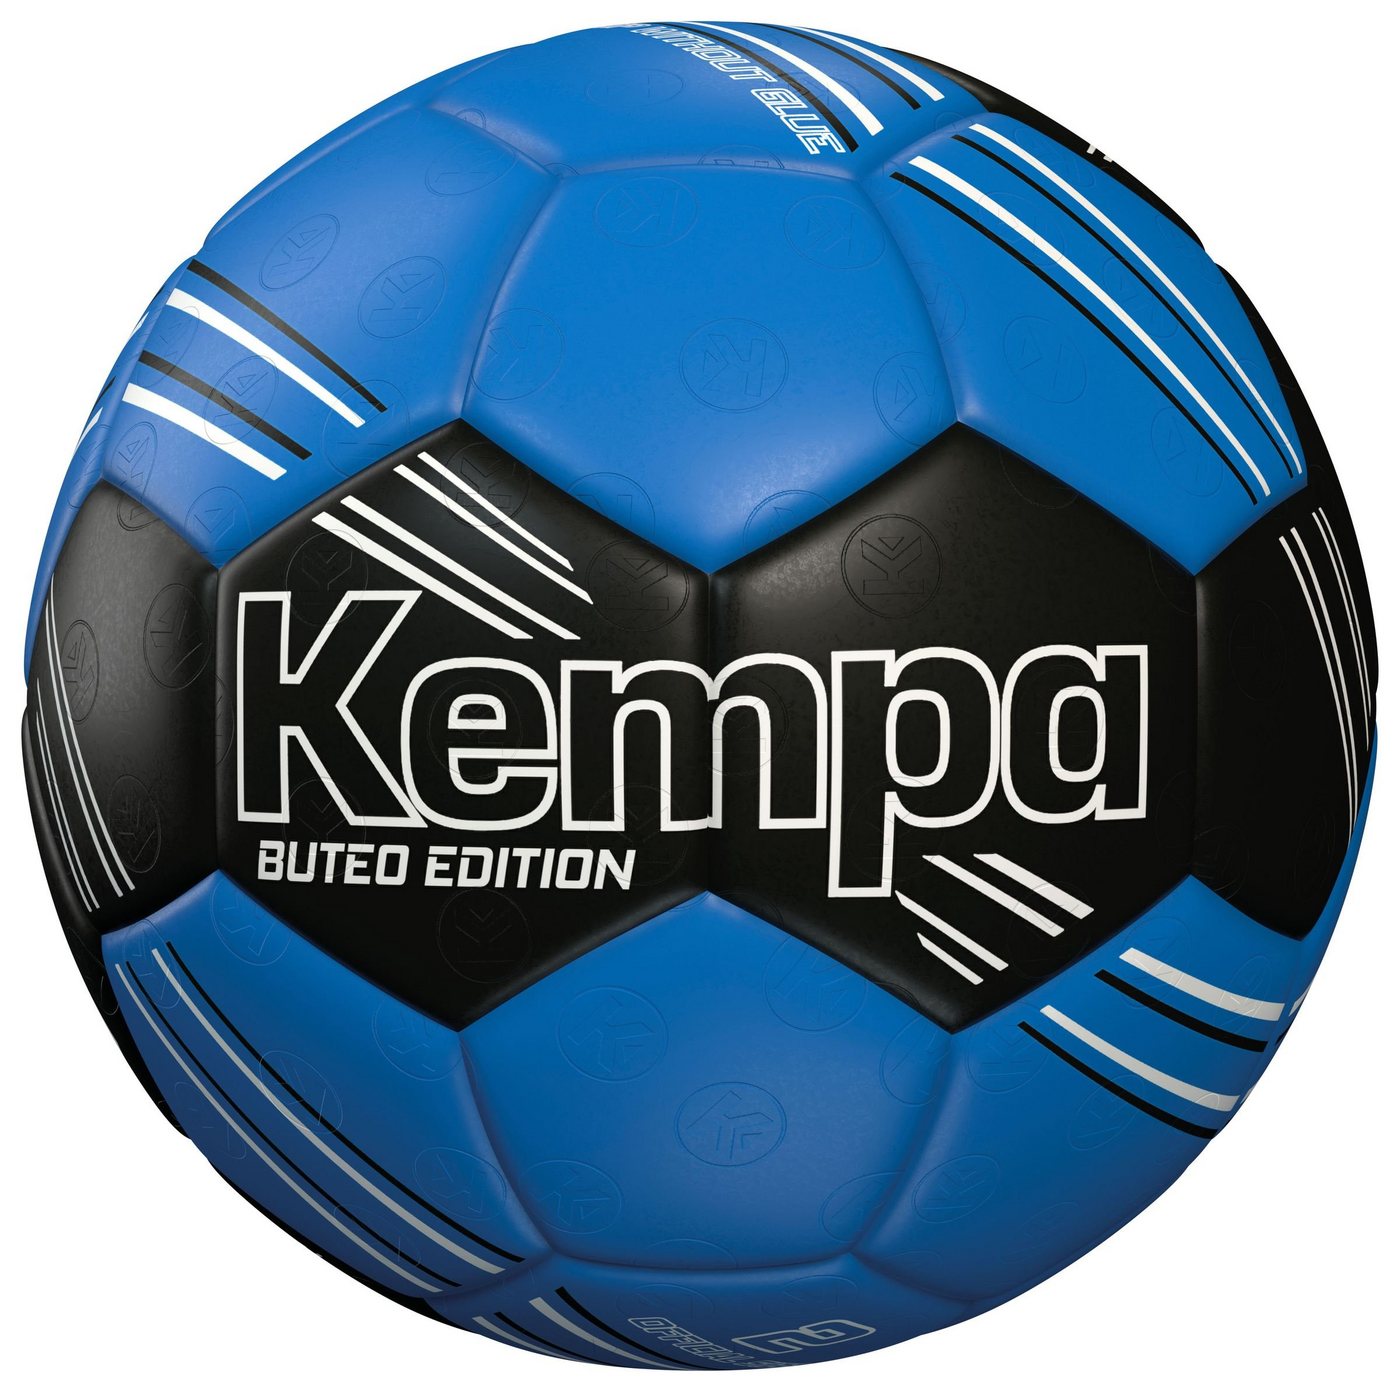 Kempa Fußball Buteo Edition von Kempa